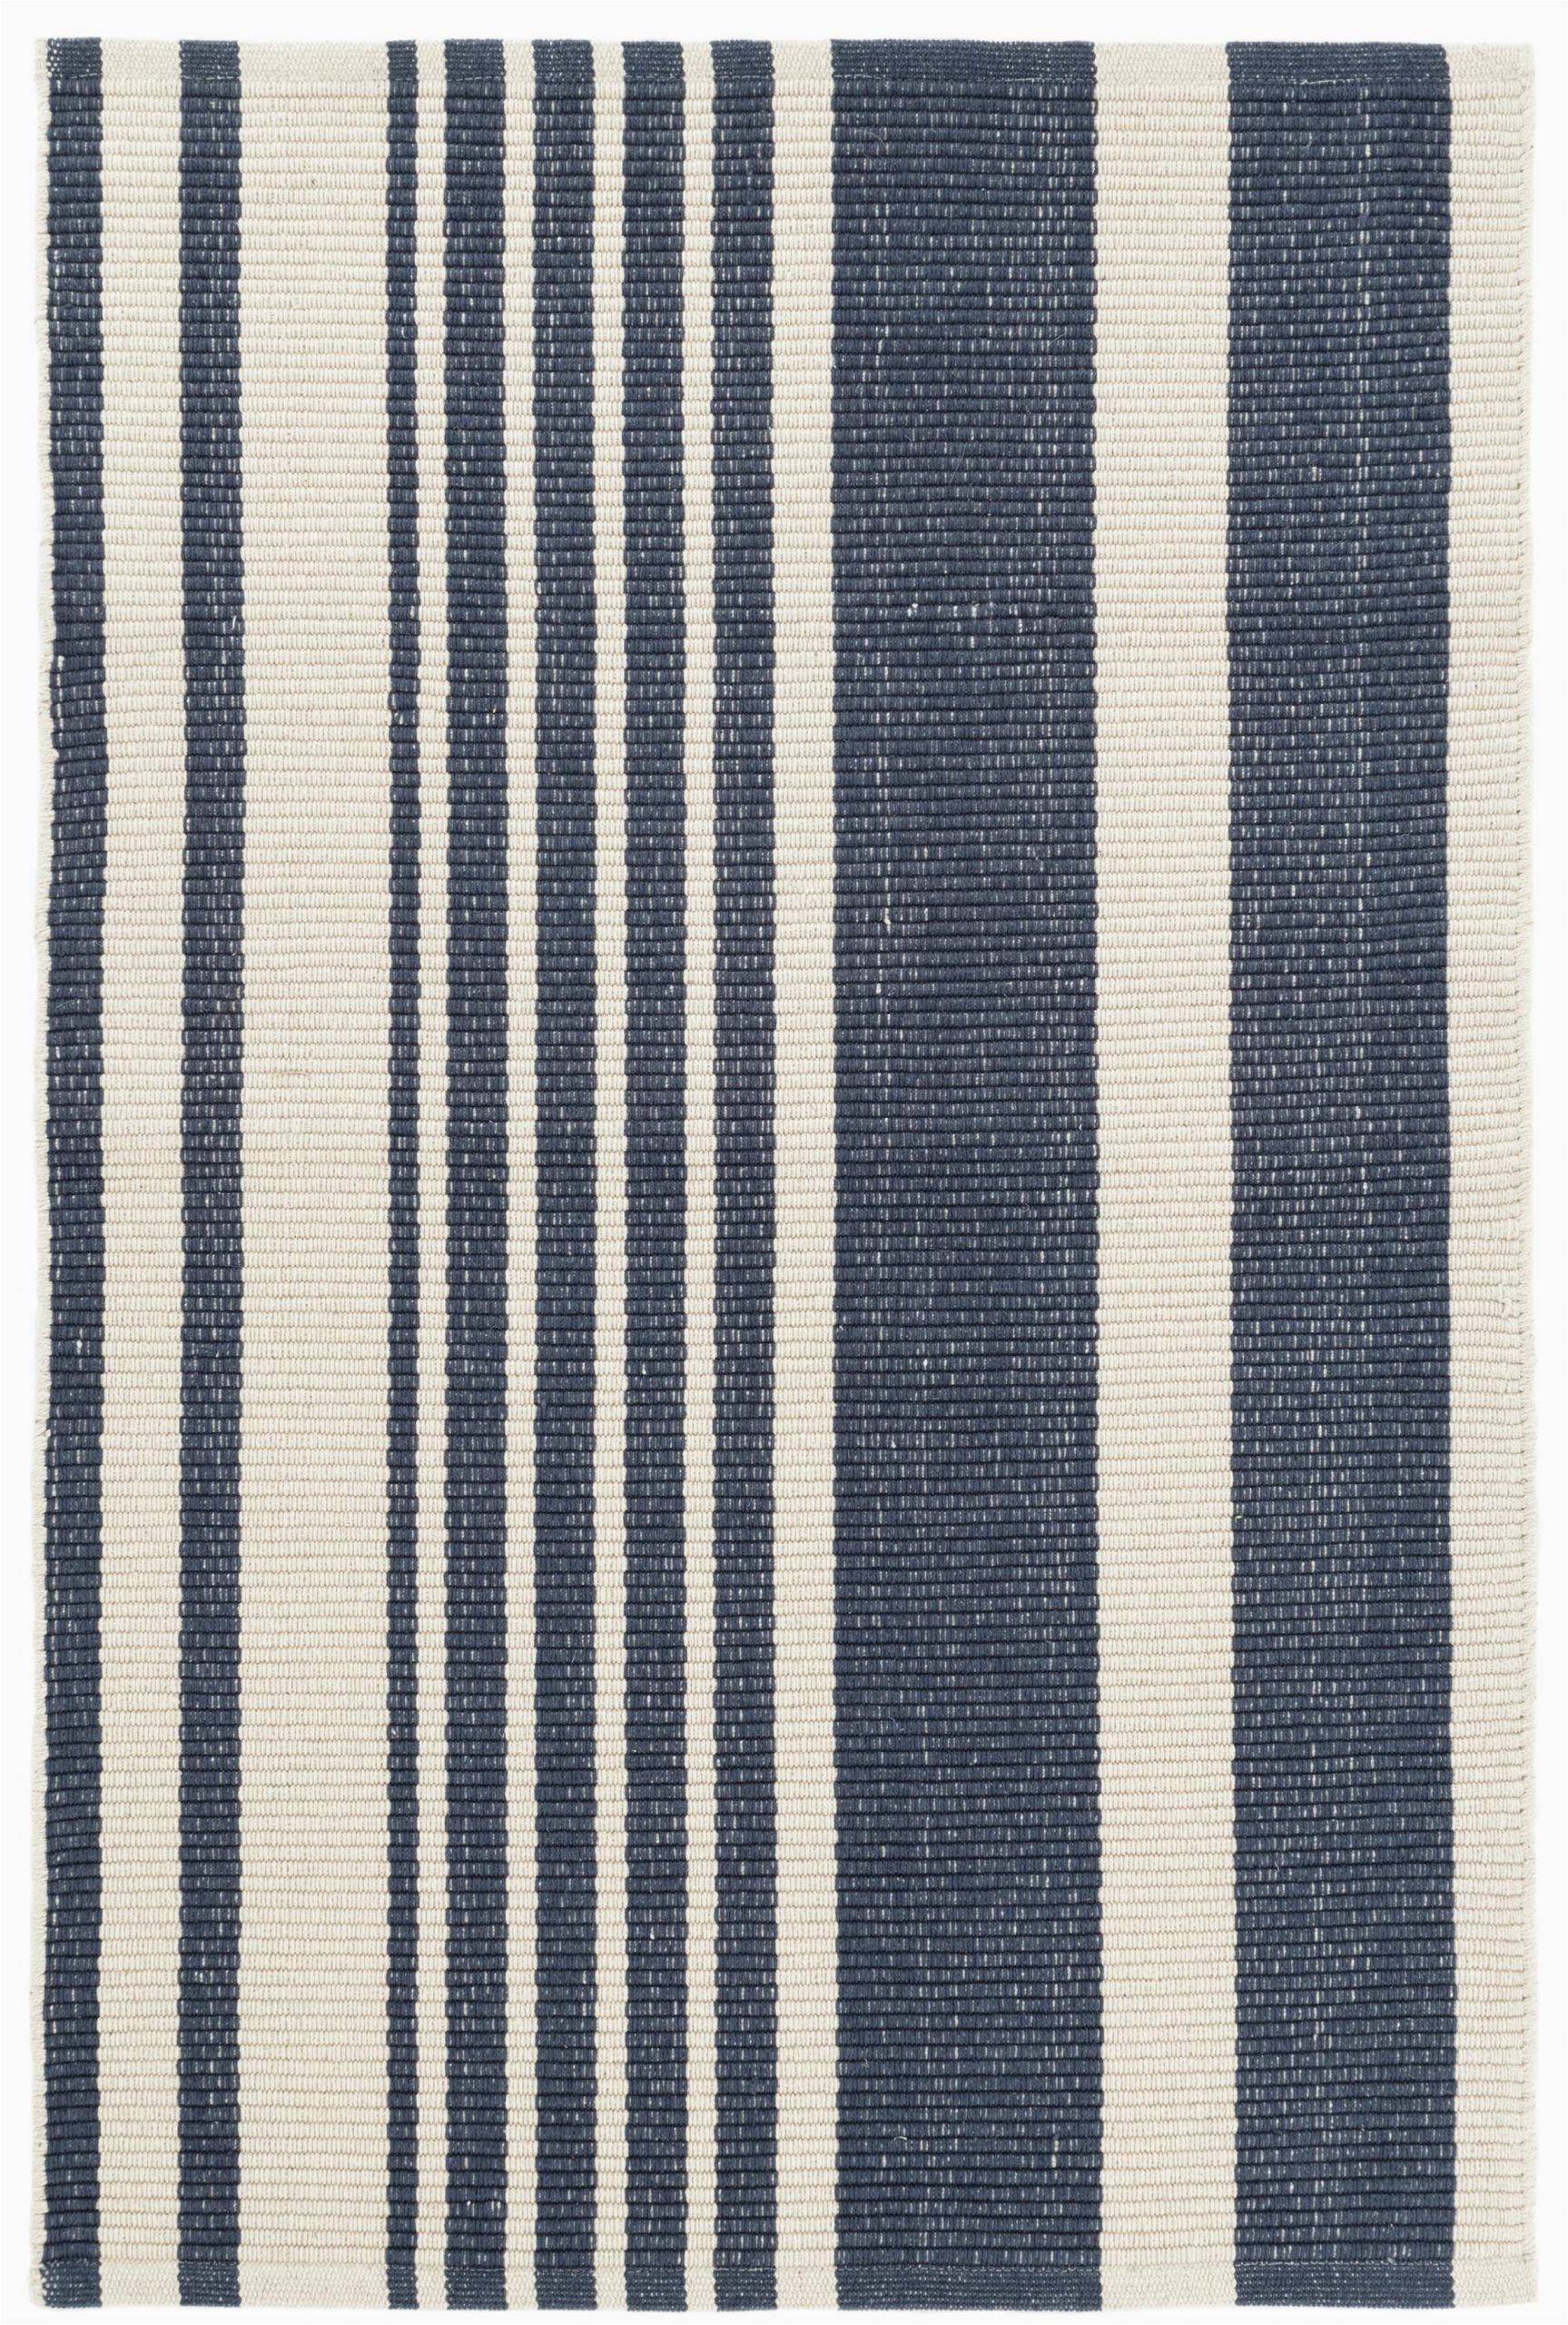 Blue and Gray Striped Rug Portland Striped Handmade Flatweave Cotton Dark Blue area Rug